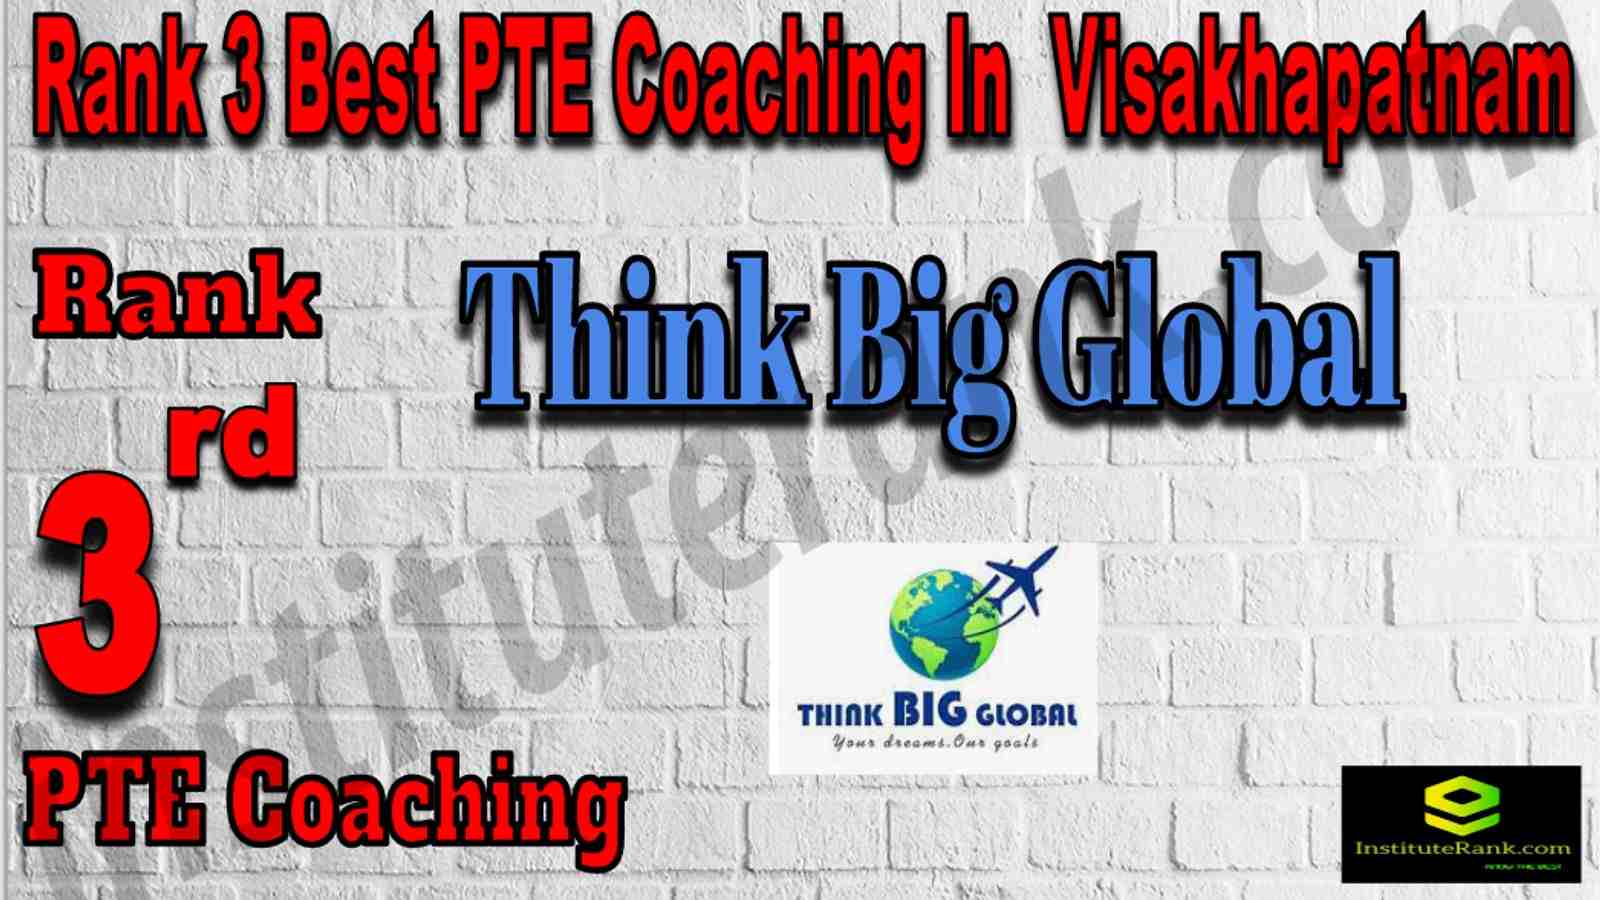 Rank 3 Best PTE Coaching In Visakhapatnam